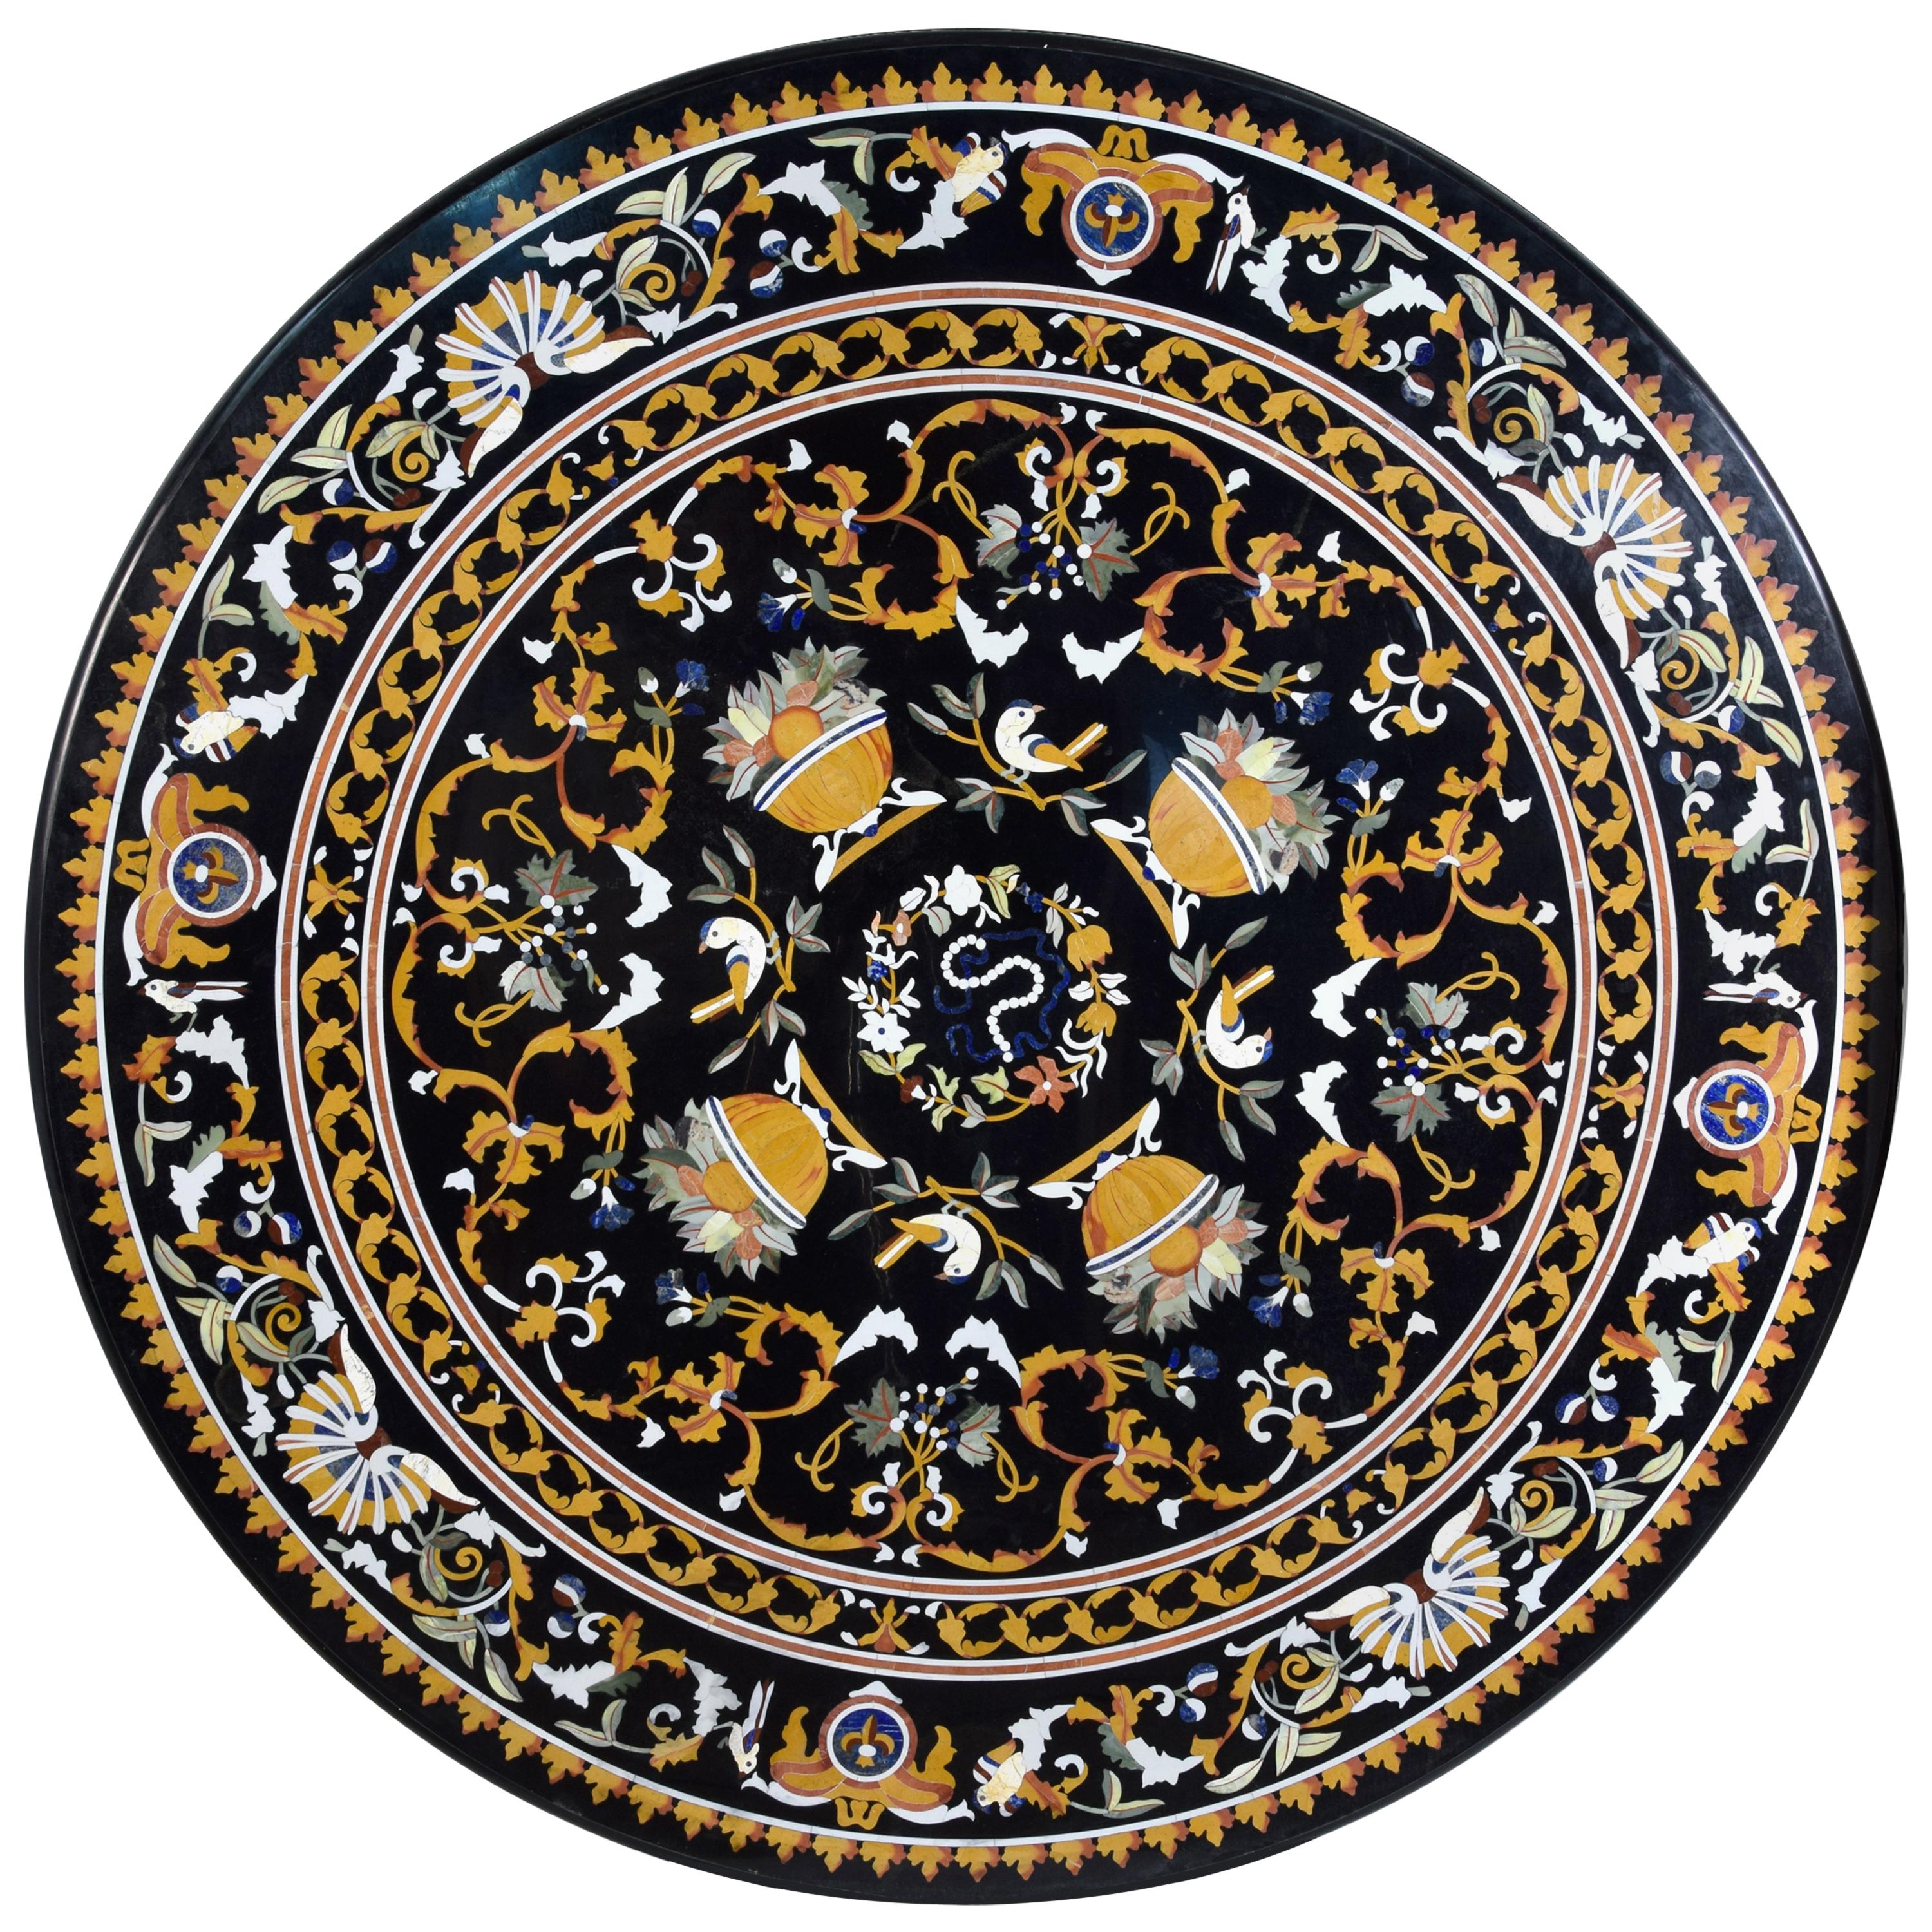 Plateau de table circulaire « Pietra Dura », marbre et pierres dures